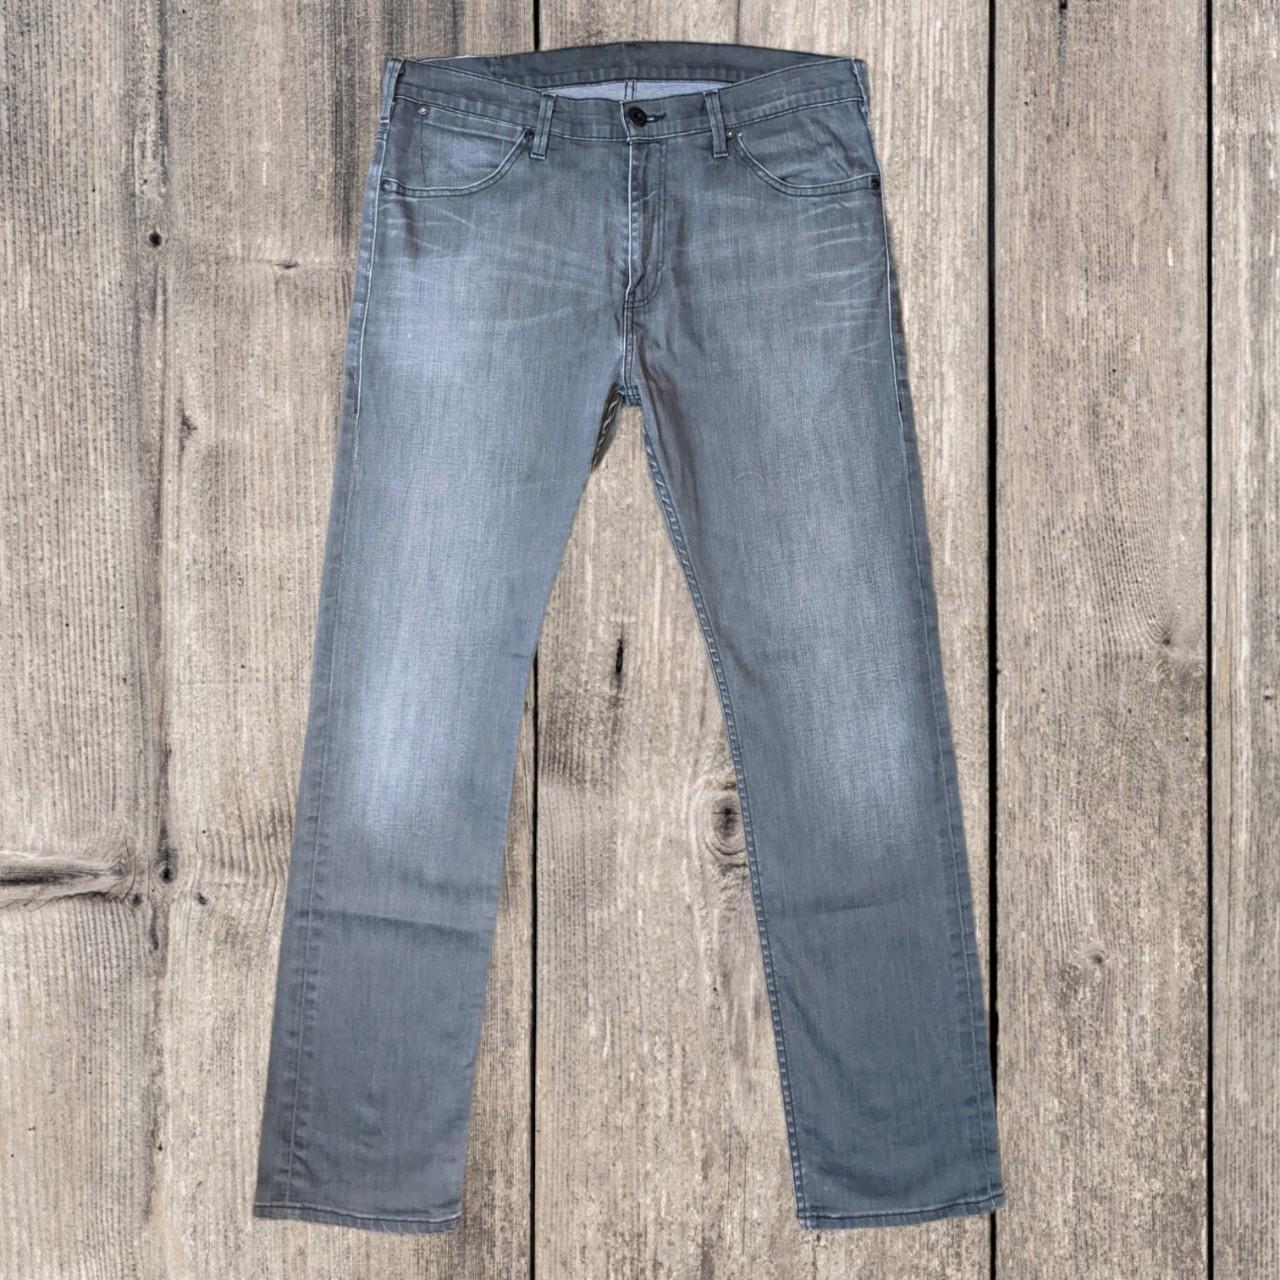 Grey Levis 504 Regular Straight Fit Jeans Levis Depop 